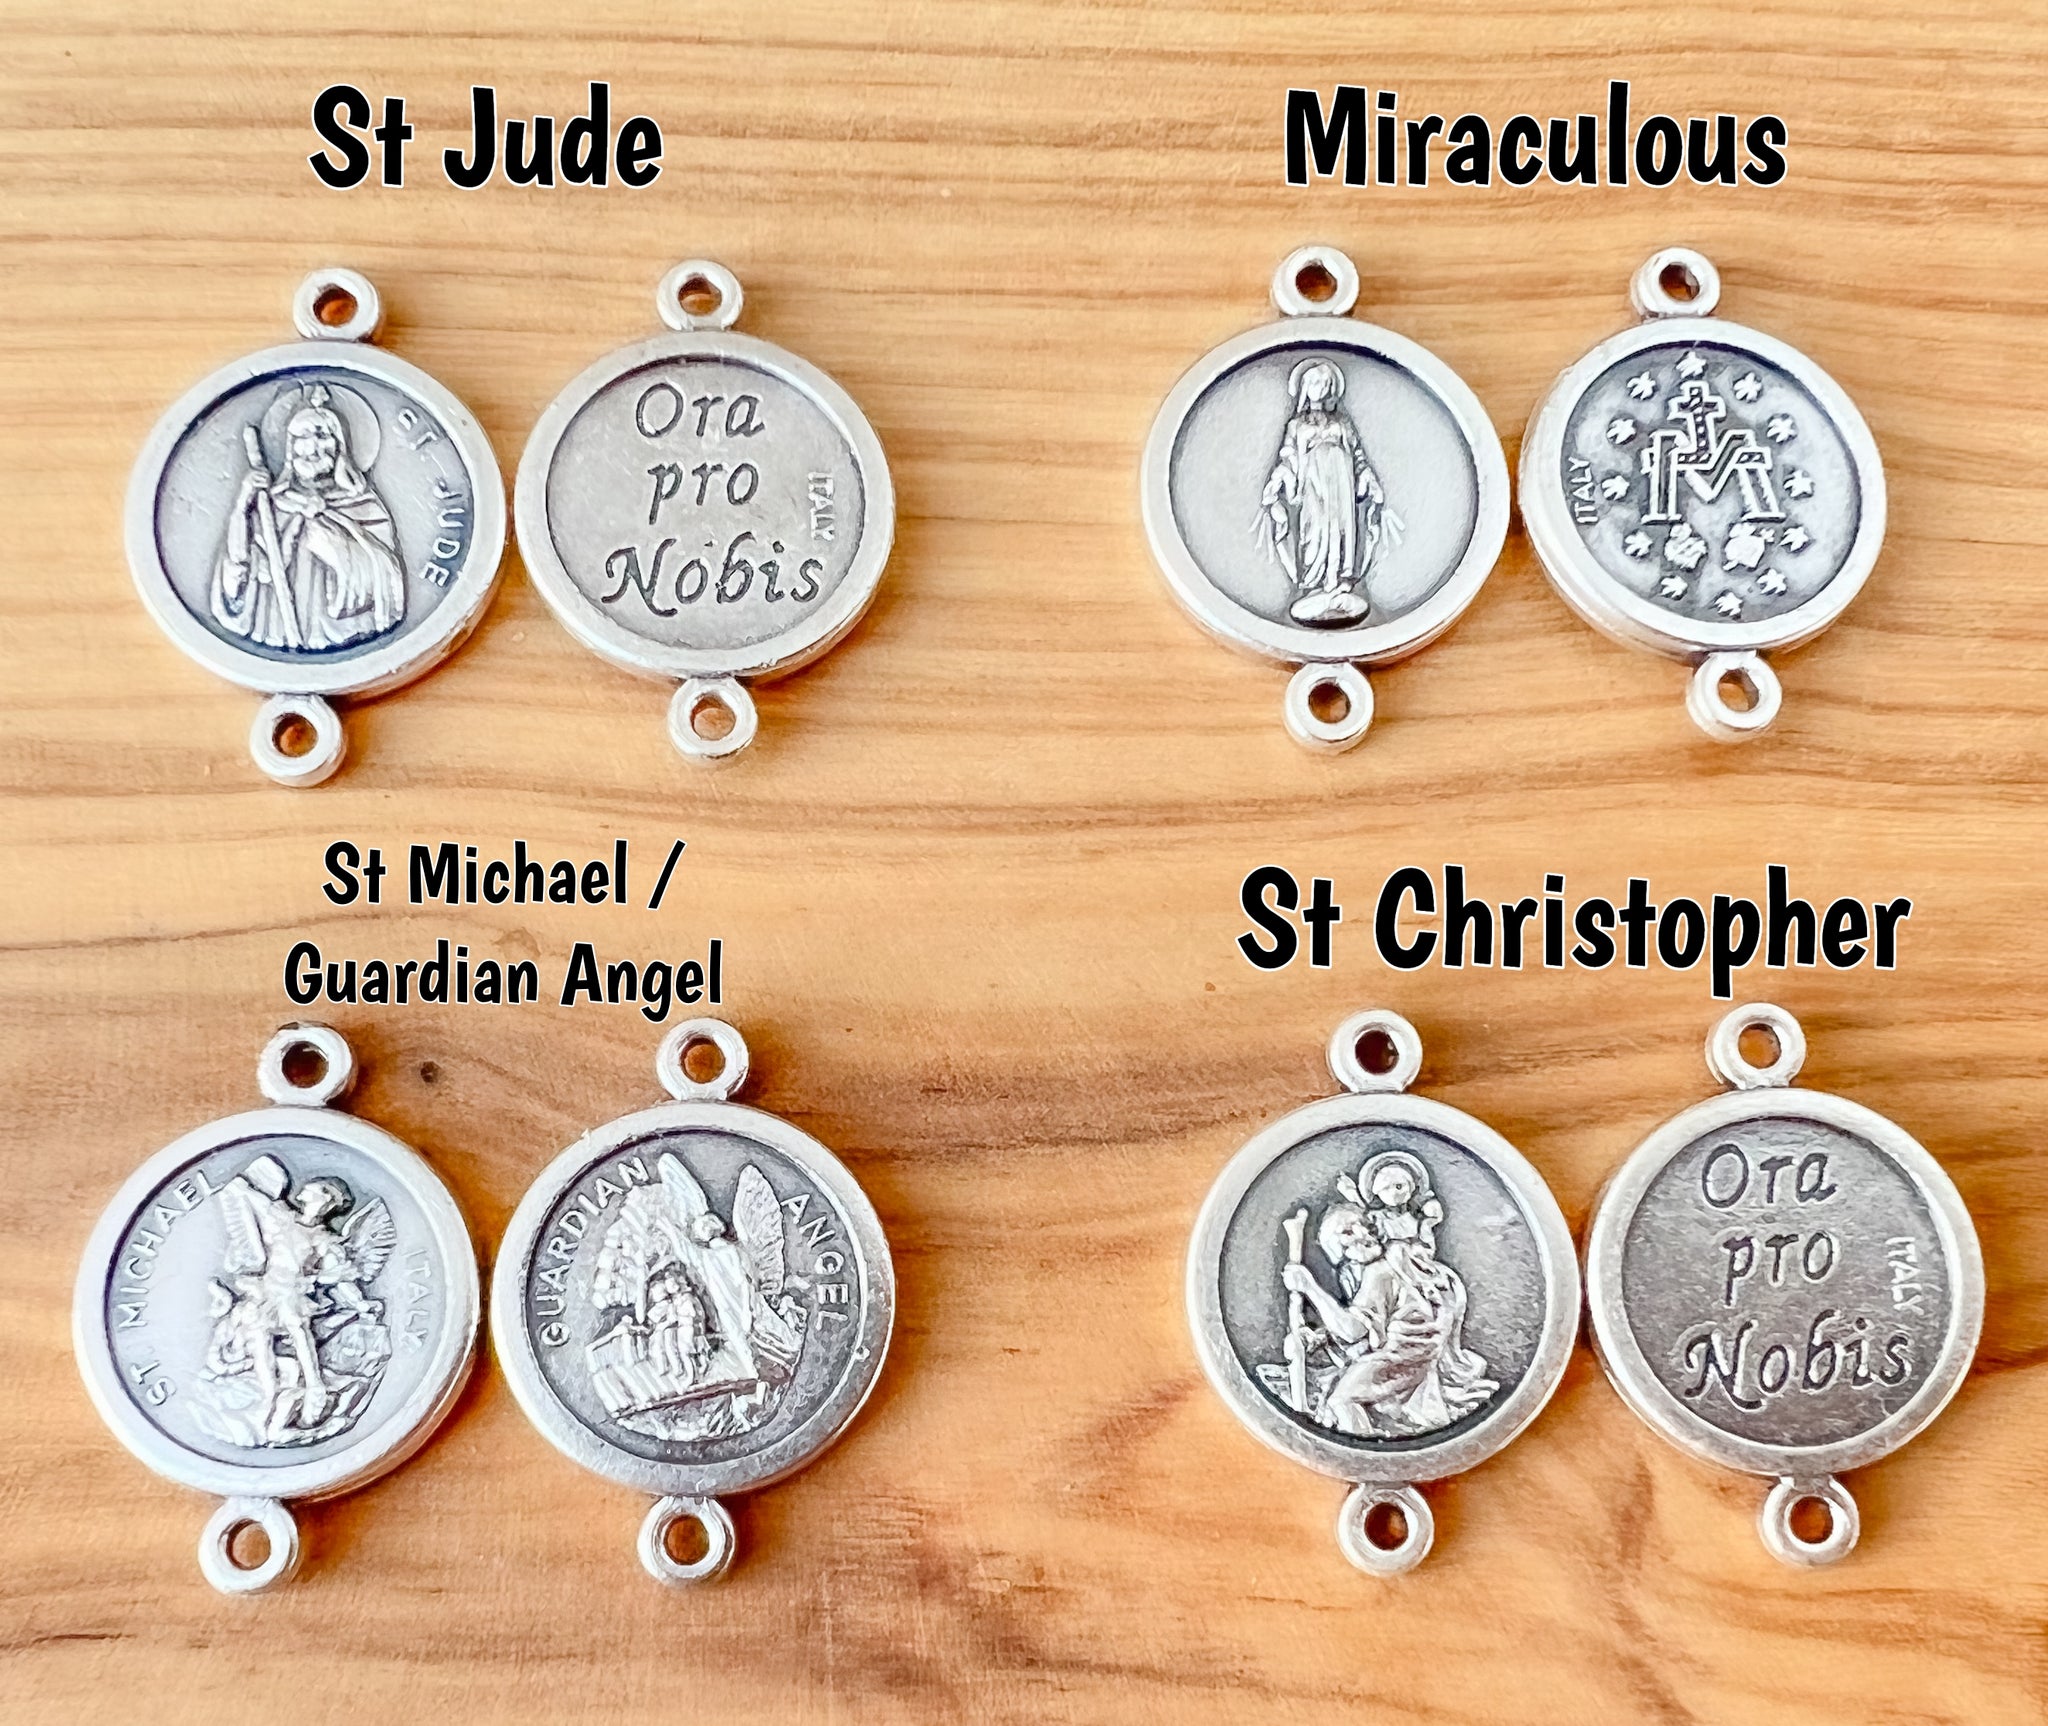 Simple Rope Bracelet with Saint Medal Minimalist Catholic Jewelry